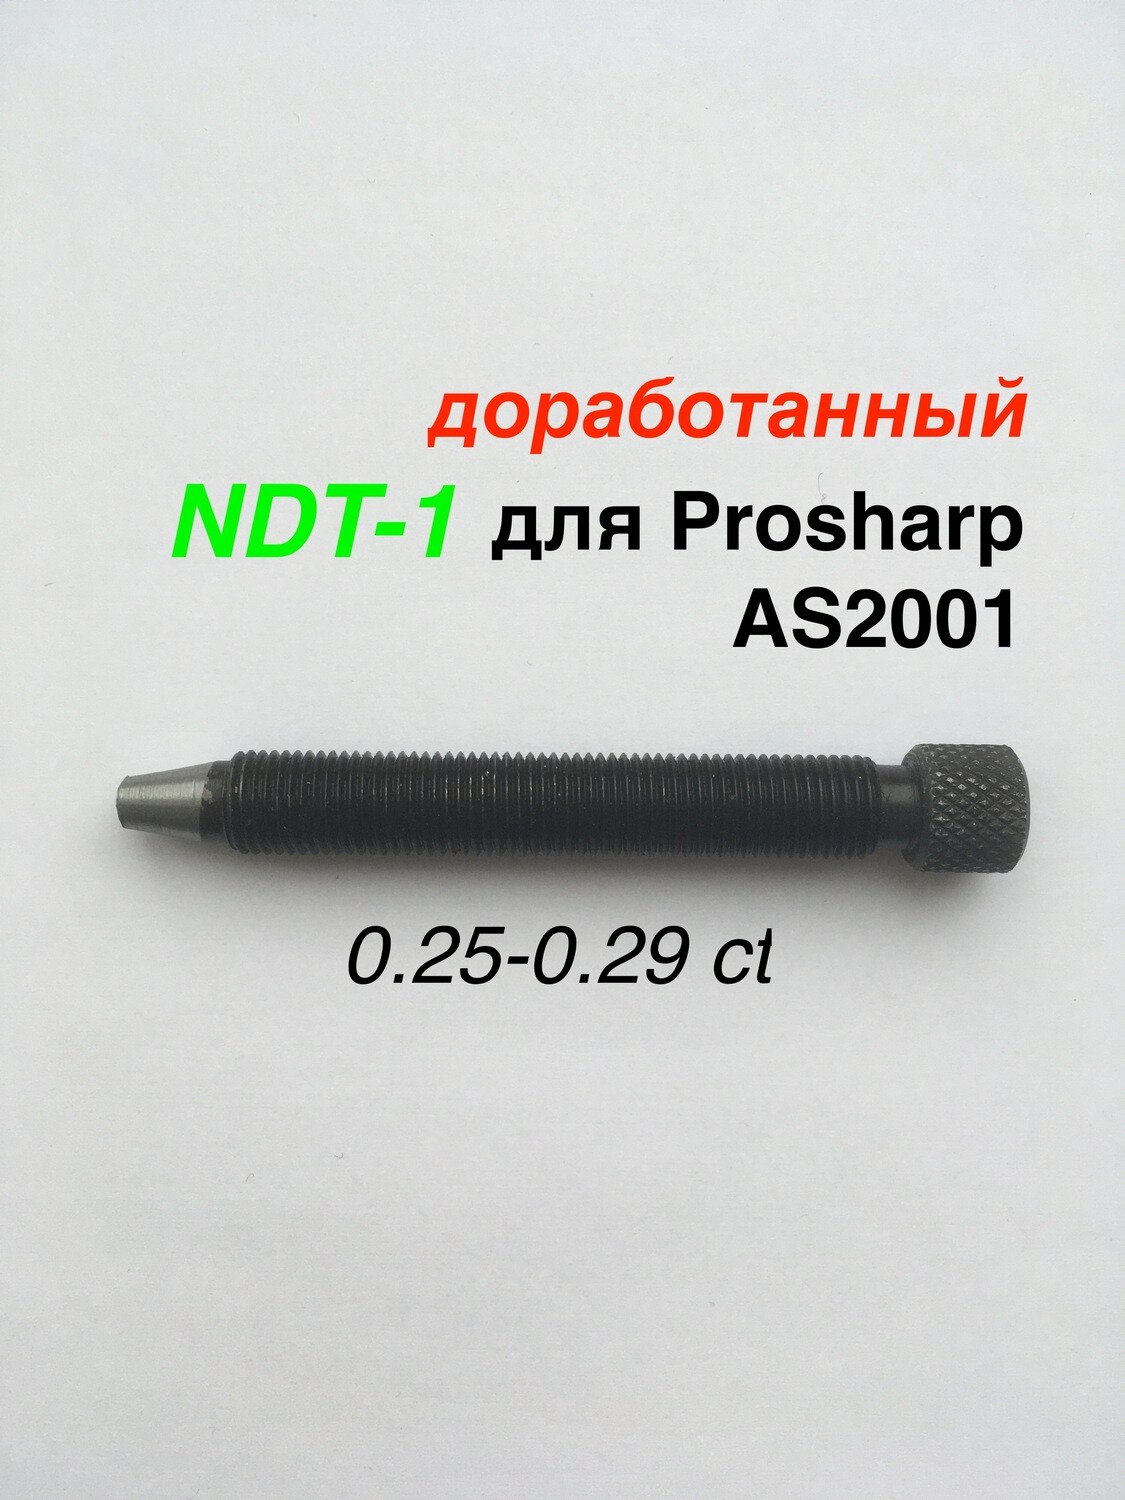 Алмазный карандаш NDT1 на Prosharp AS2001 L80mm 0,25-0,29ct доработанный